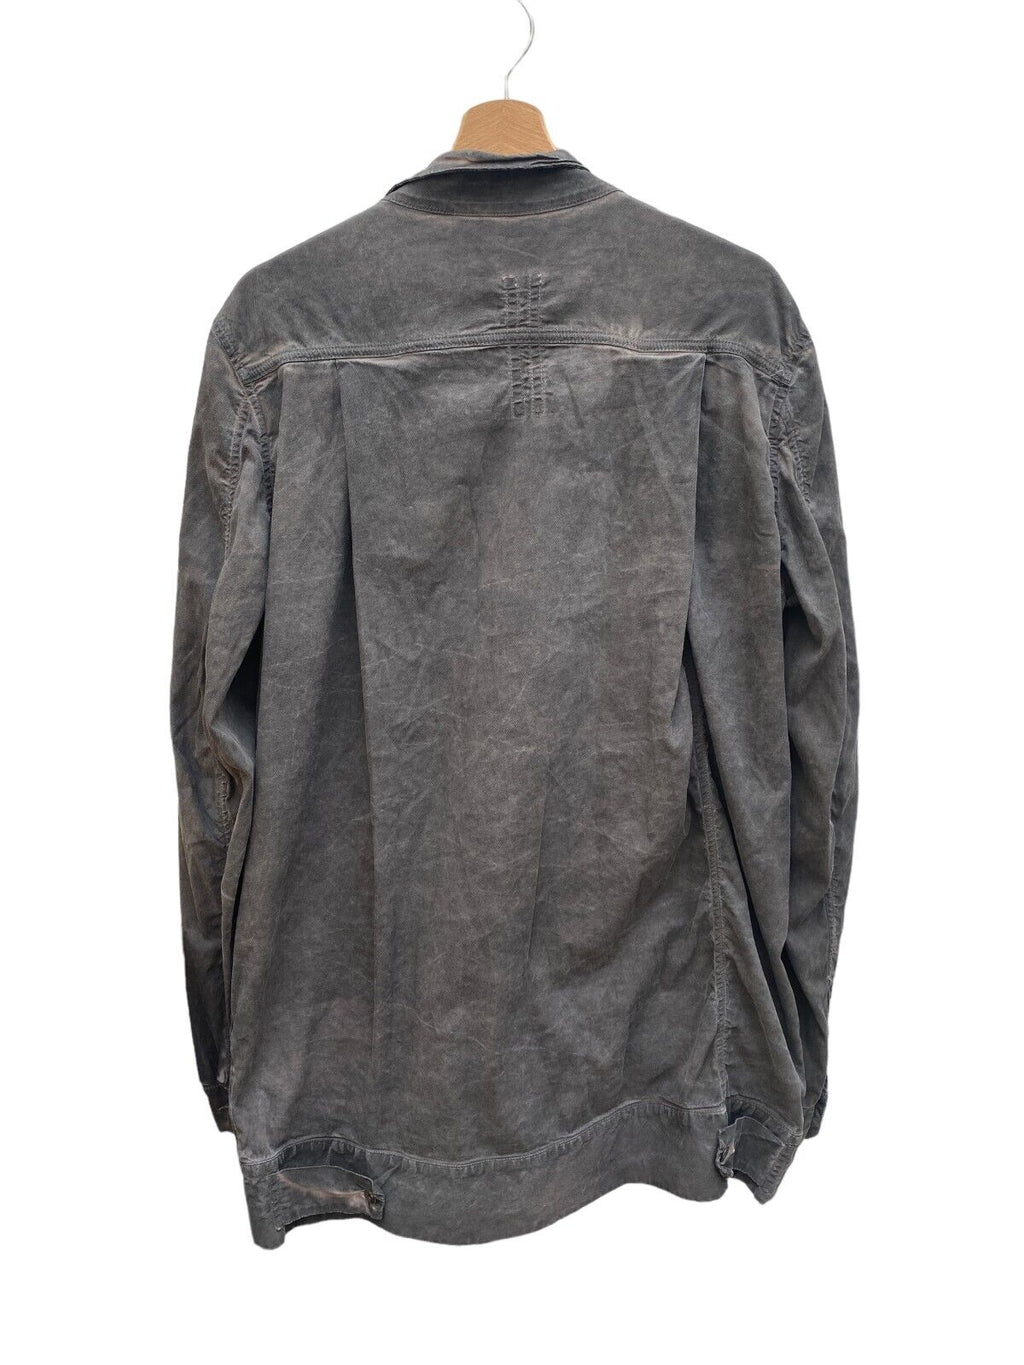 Slave Jacket  Muds - Brown Color  Size M Medium